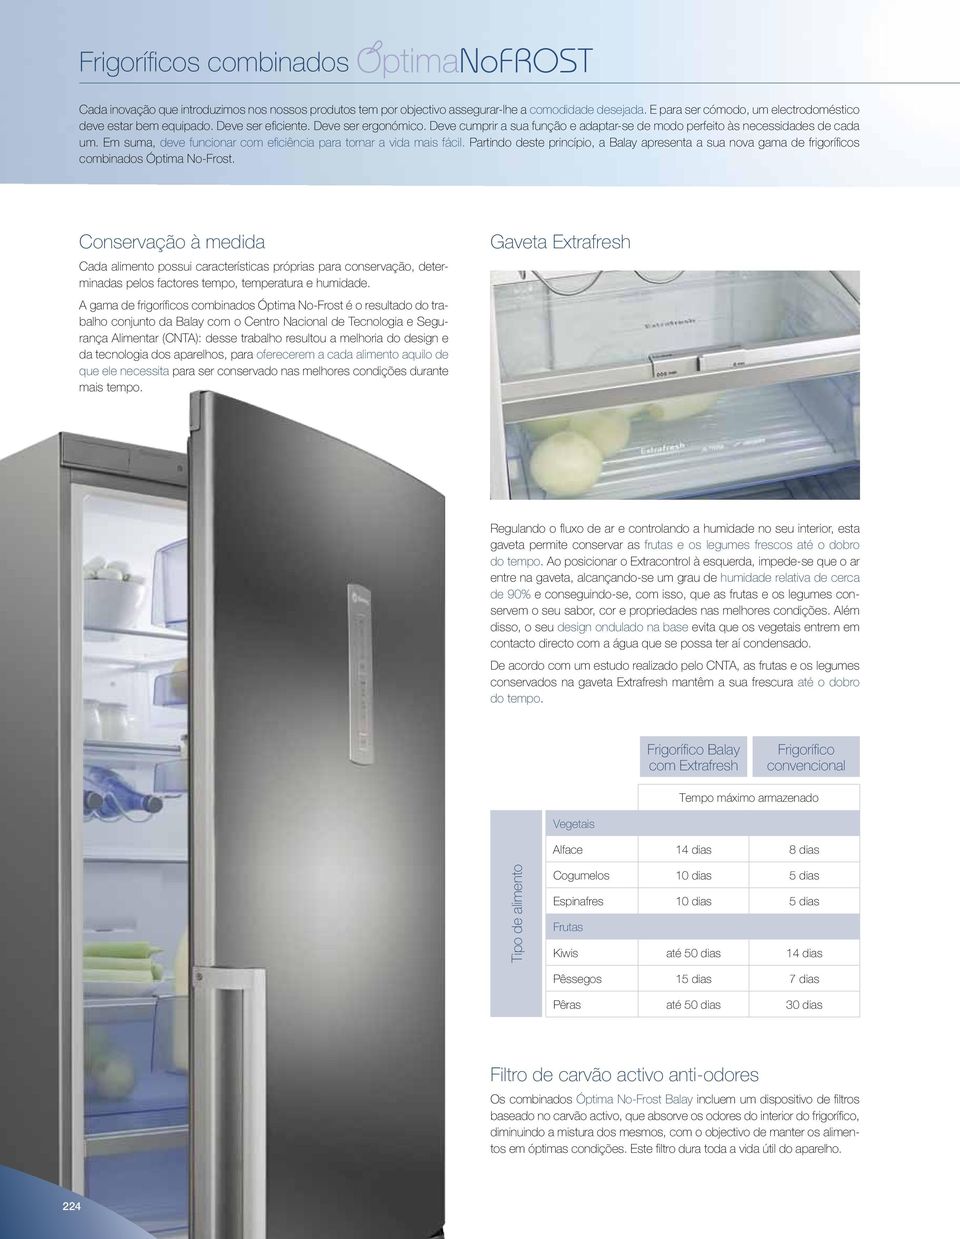 Partindo deste princípio, a Balay apresenta a sua nova gama de frigoríficos combinados Óptima No-Frost.